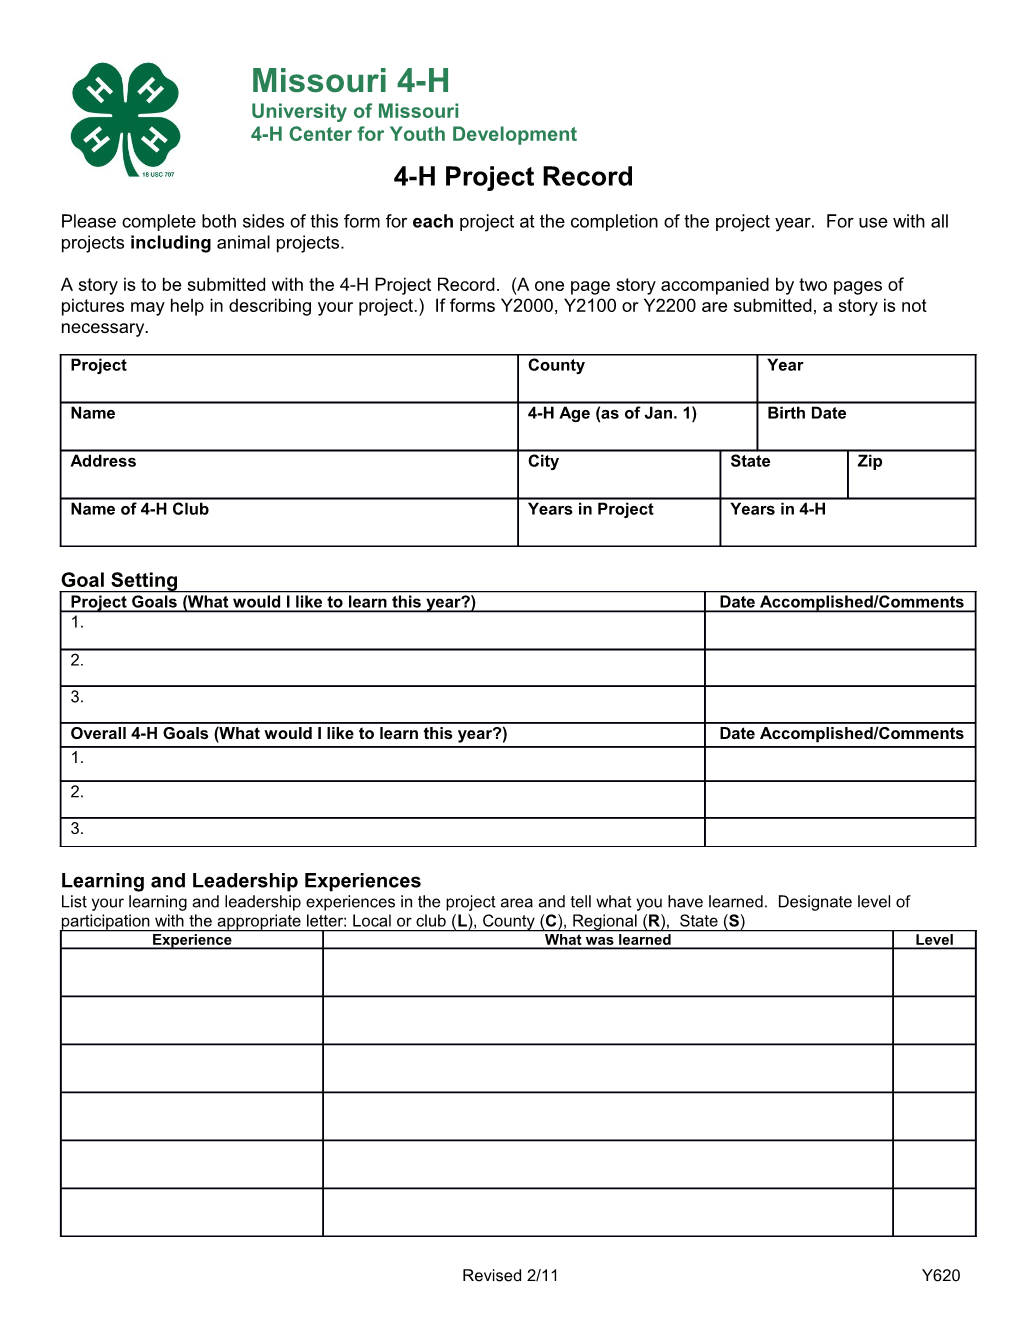 The Missouri Project Record